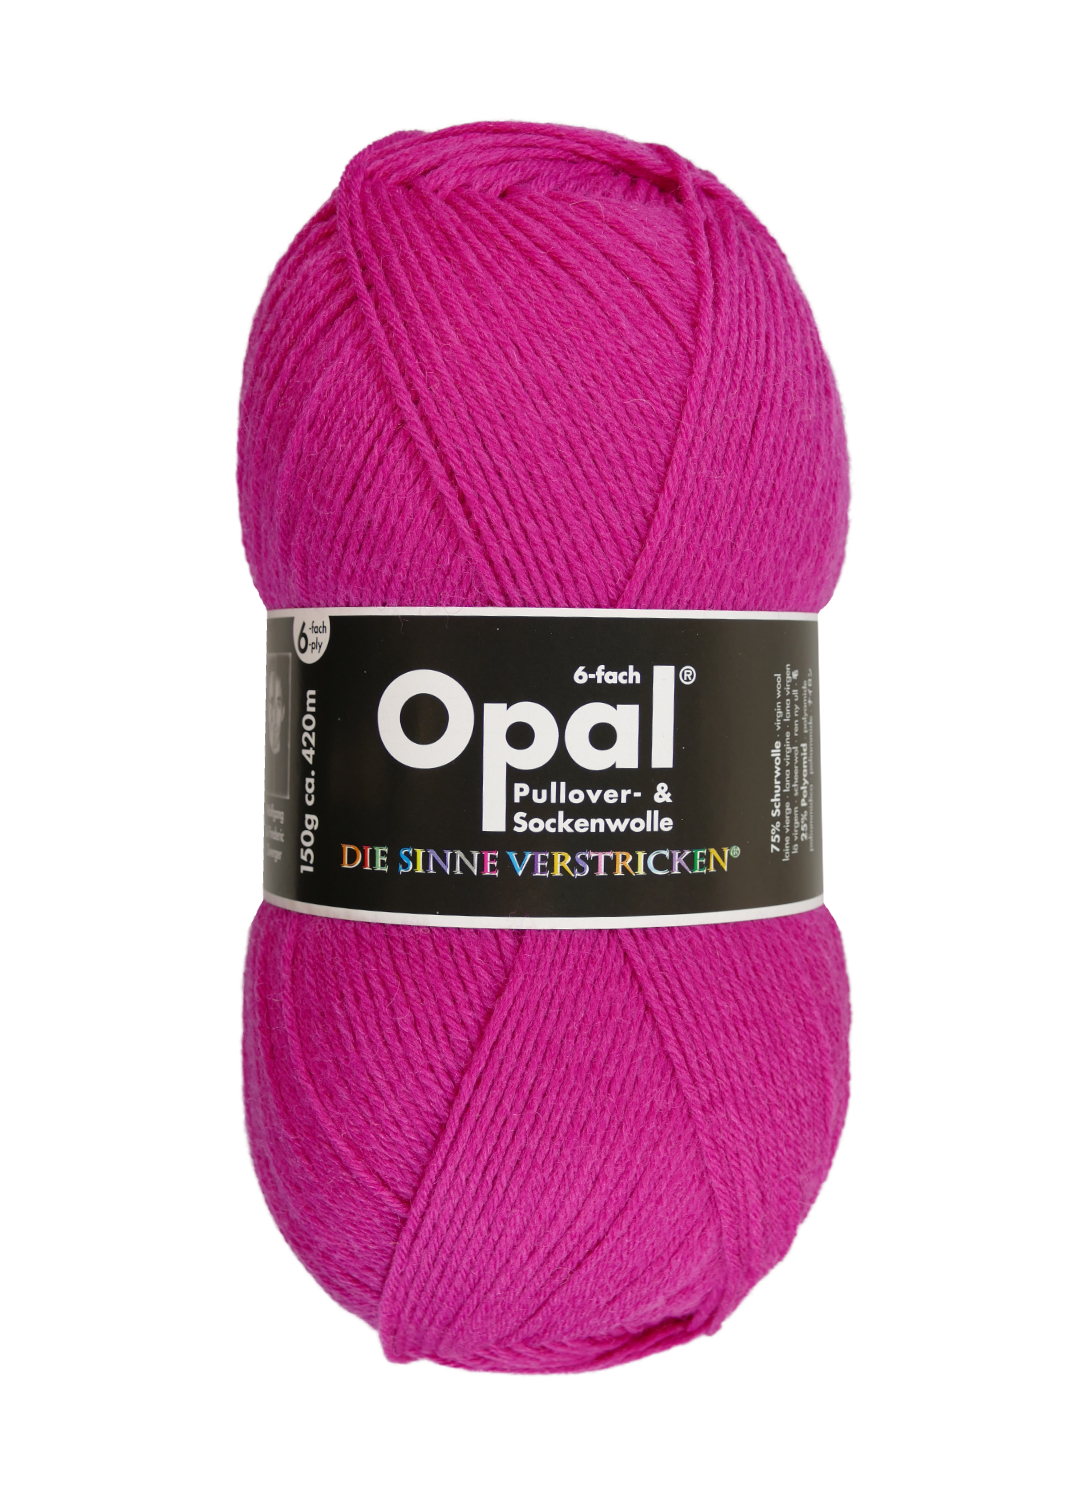 OPAL Uni - 6-fach Sockenwolle 7901 - pink